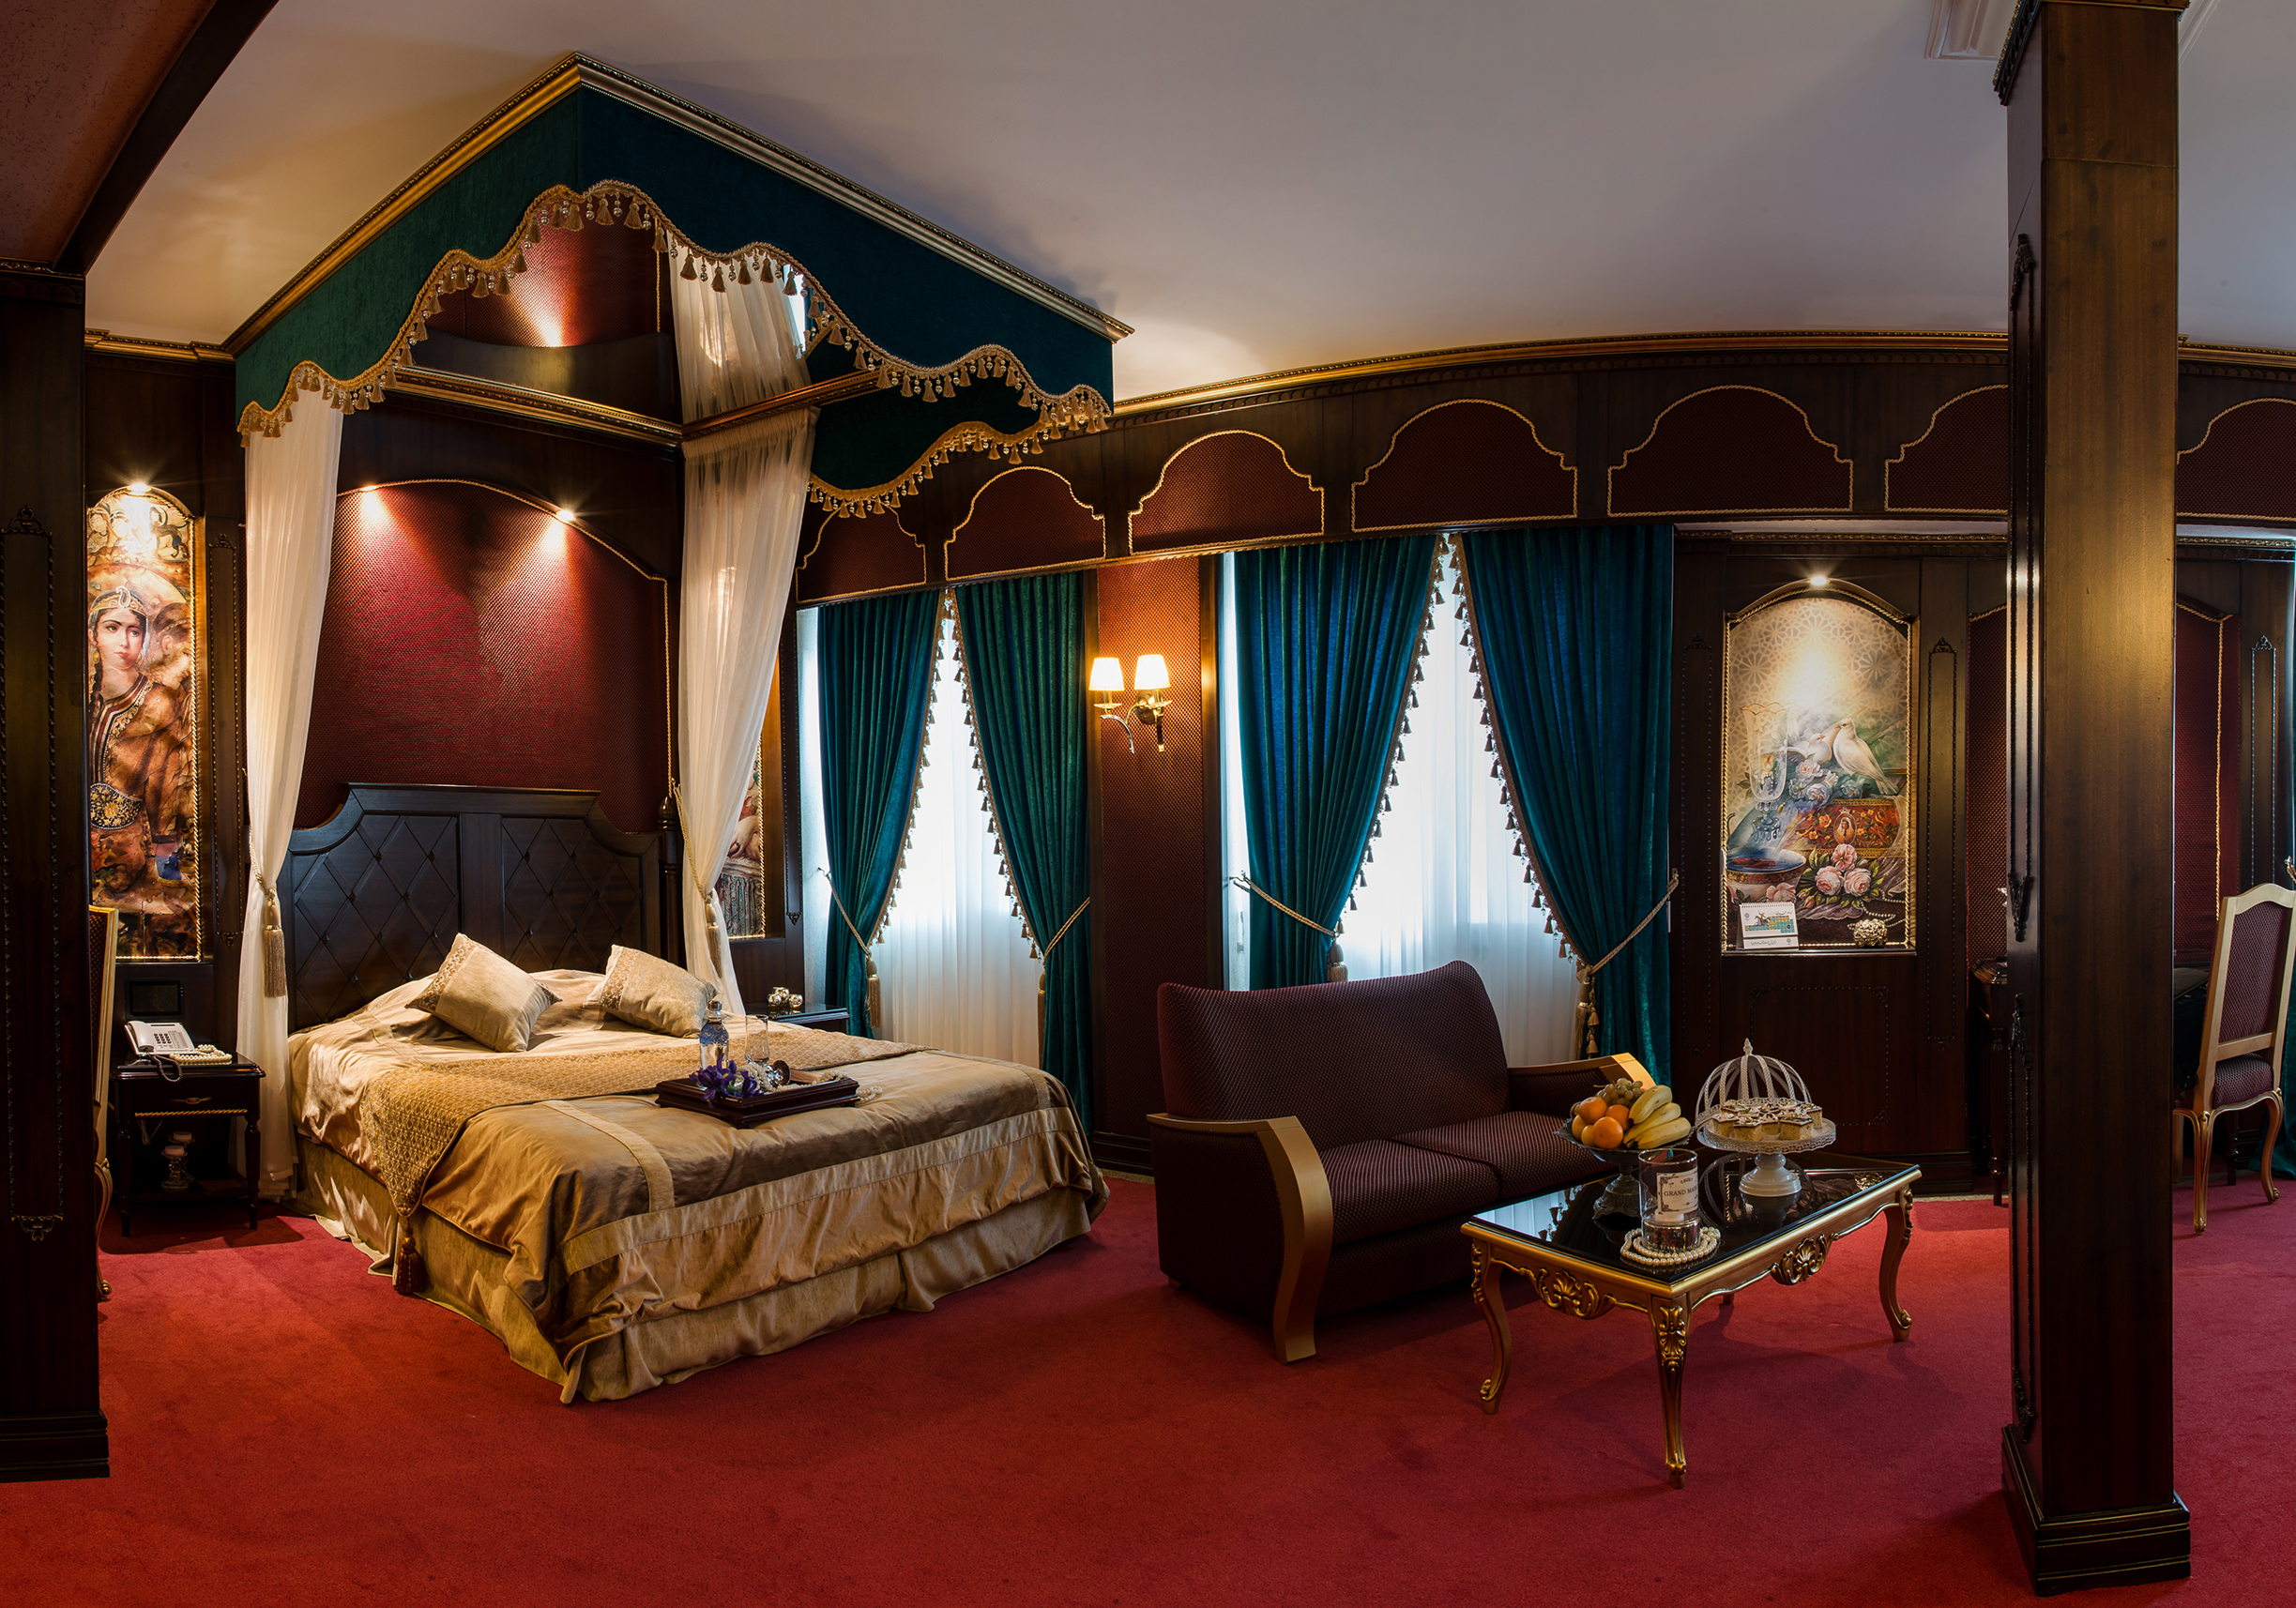  هتل بین المللی قصر مشهد